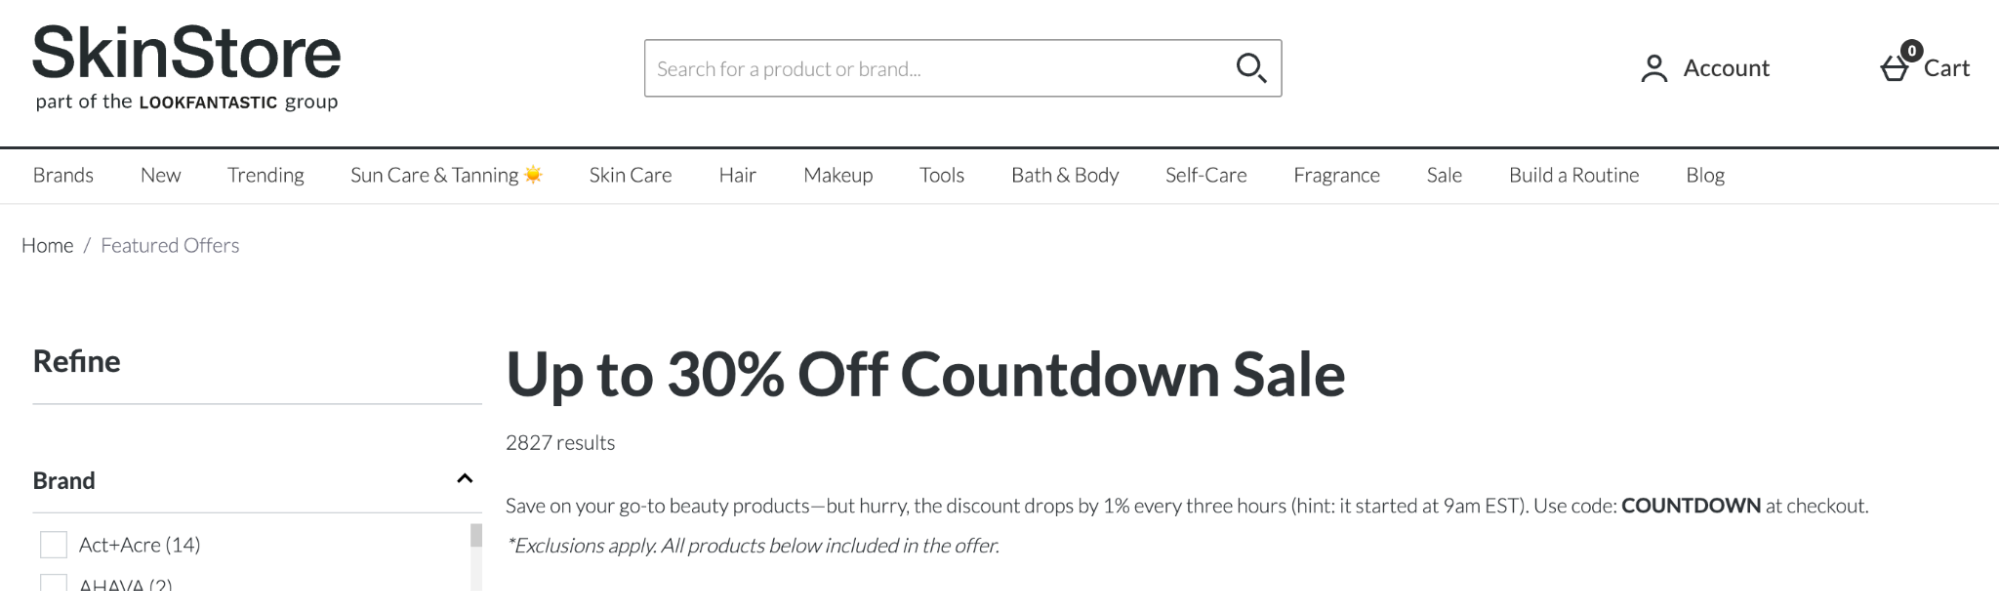 SkinStore flash sale